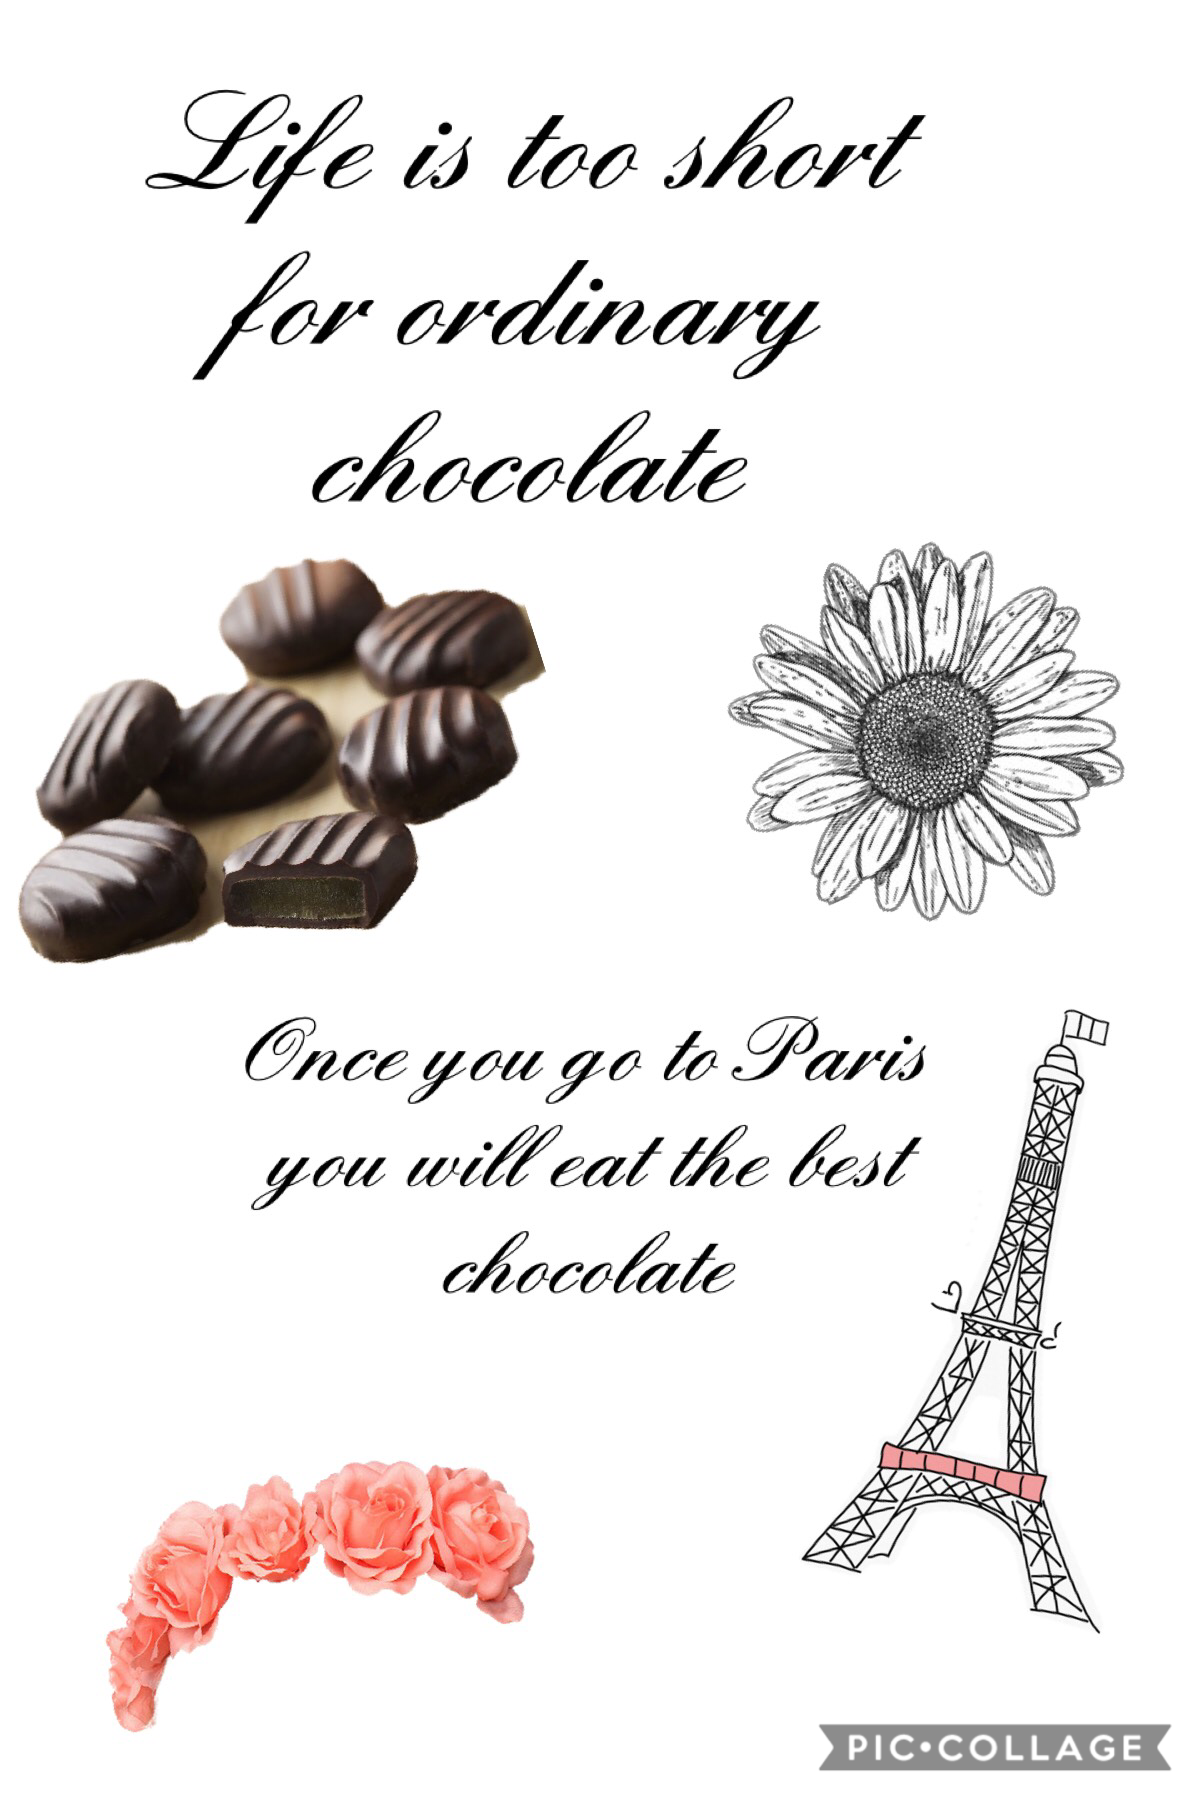 Paris has the best chocolate!